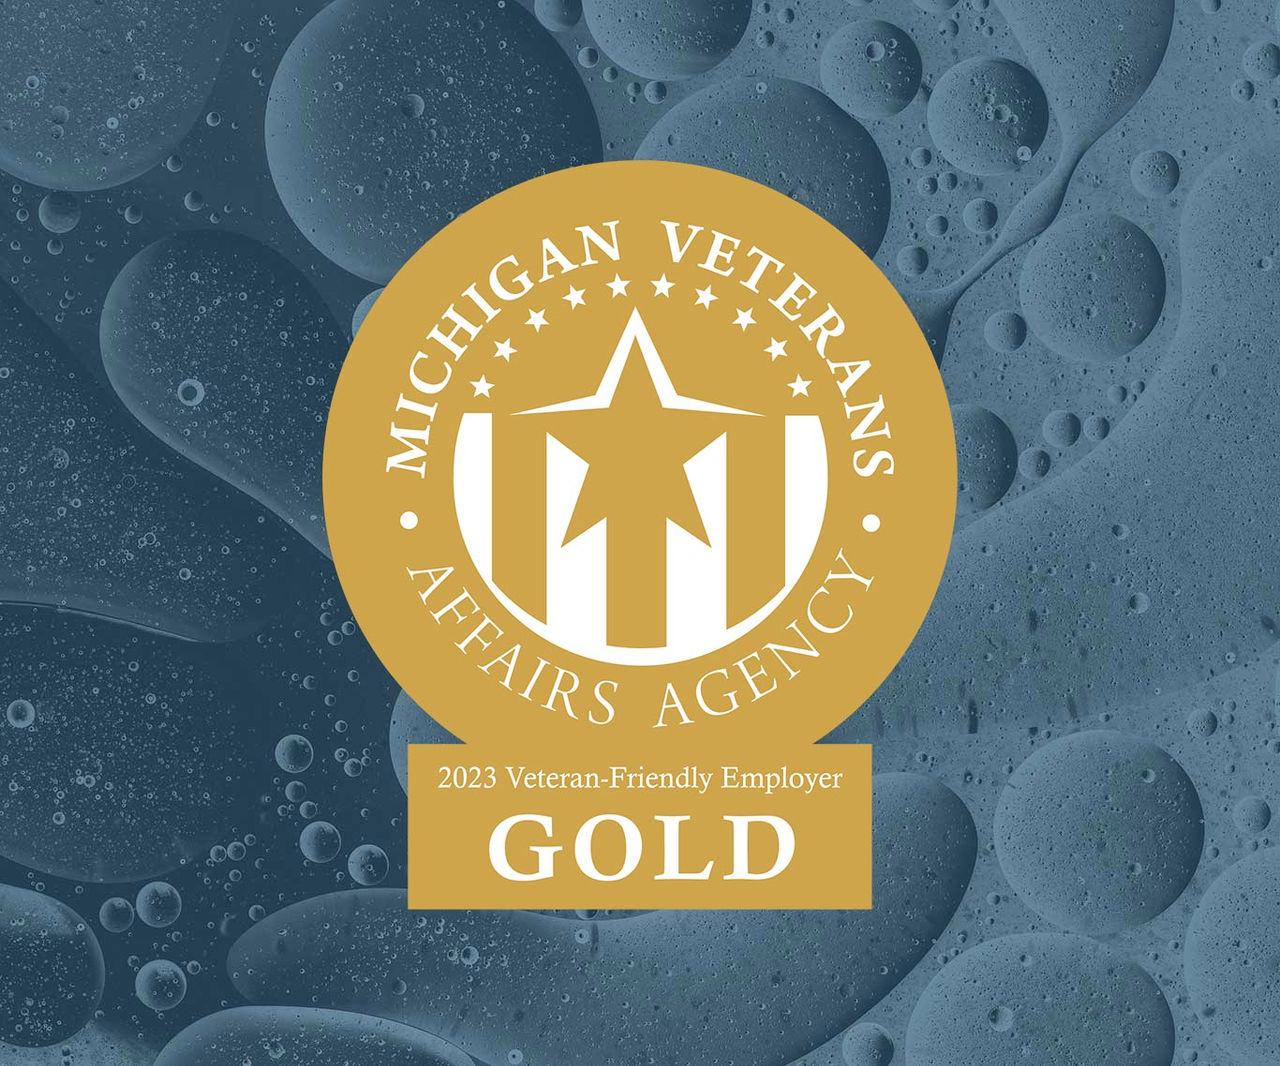 MI Veterans Affairs agency gold award